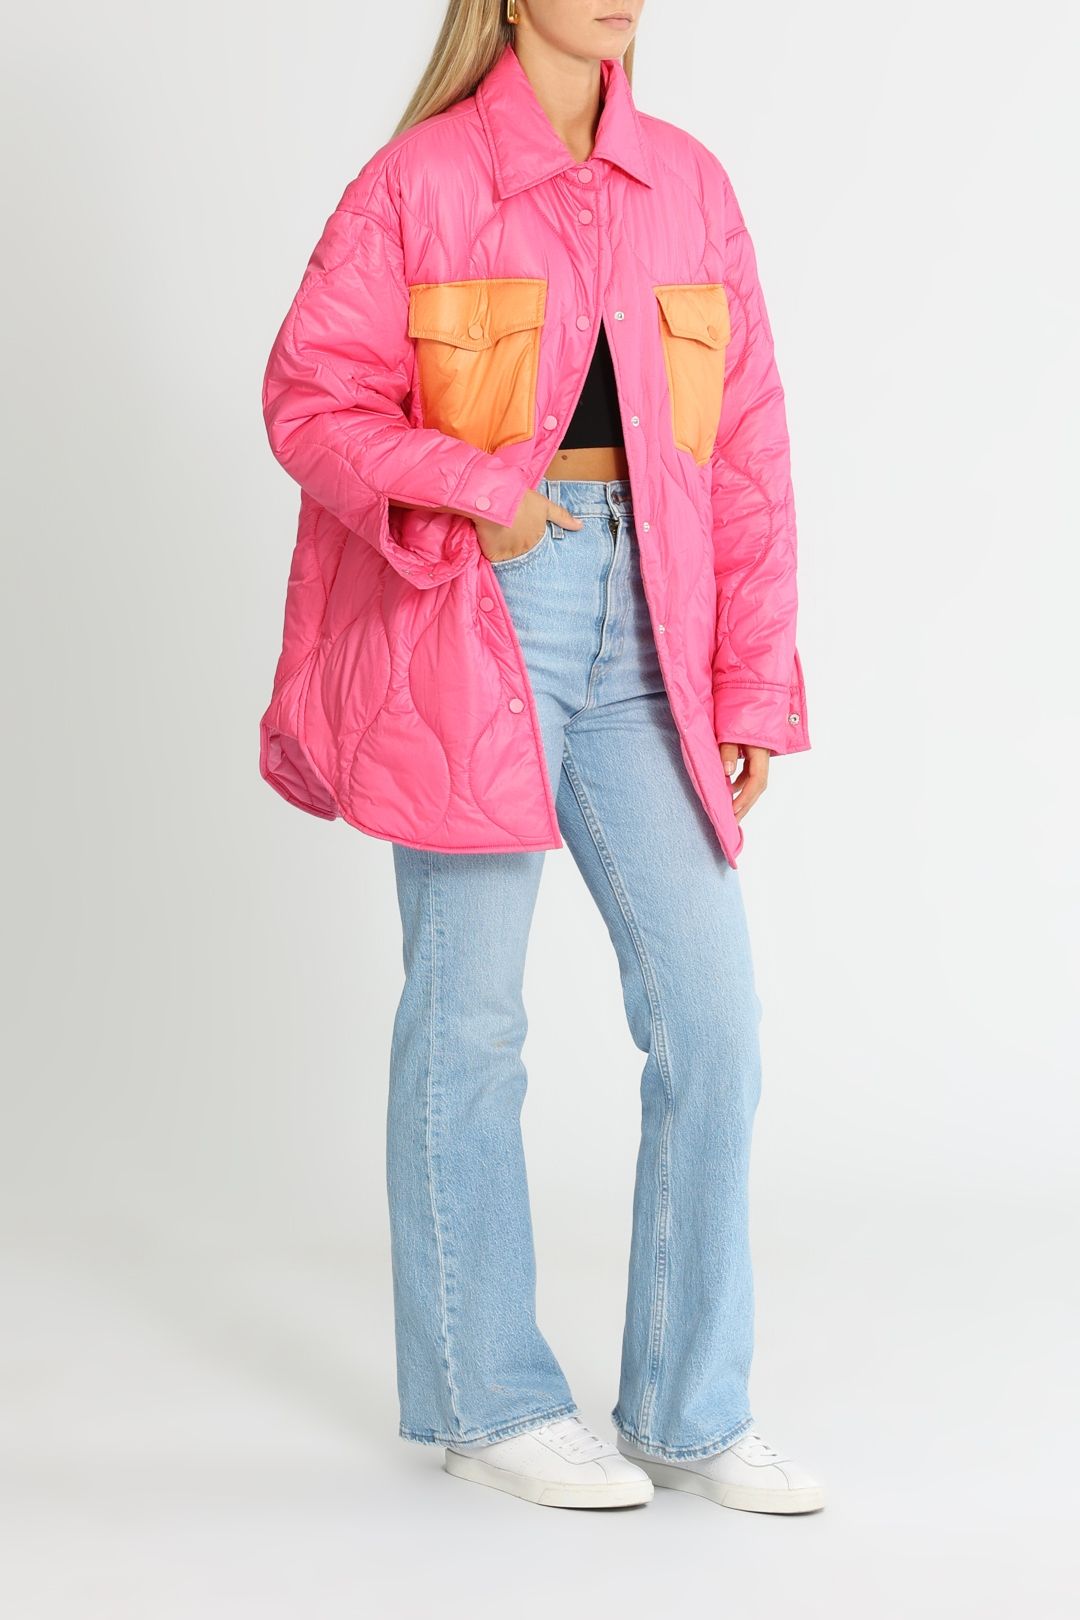 Blanca Buckley Jacket Orange Pink Pockets